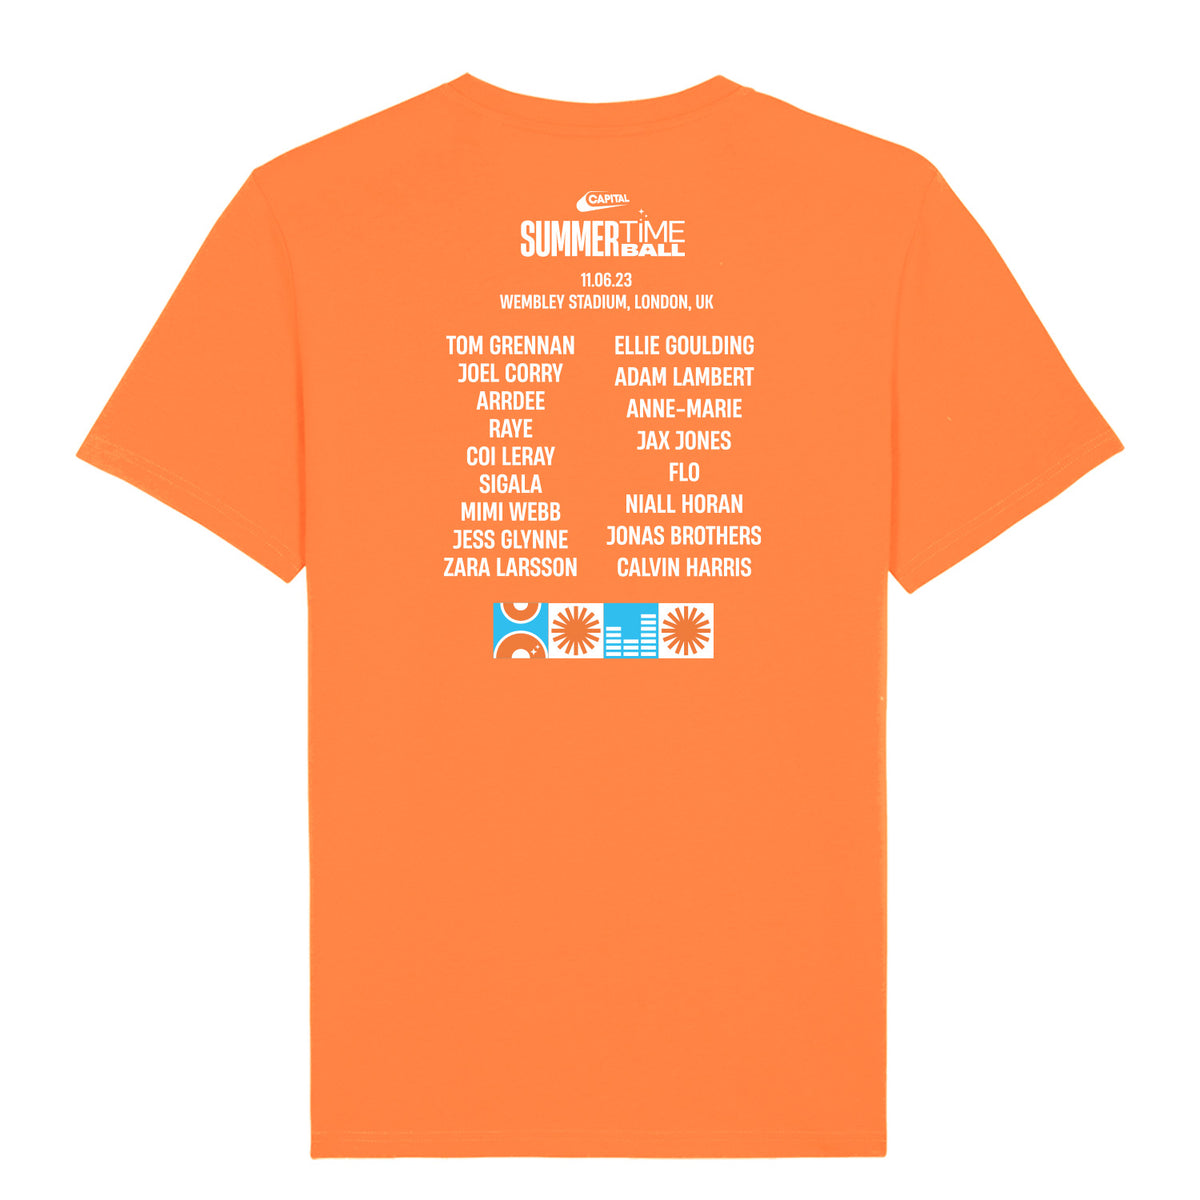 Summetime Ball 2023 Line Up In Orange T-Shirt